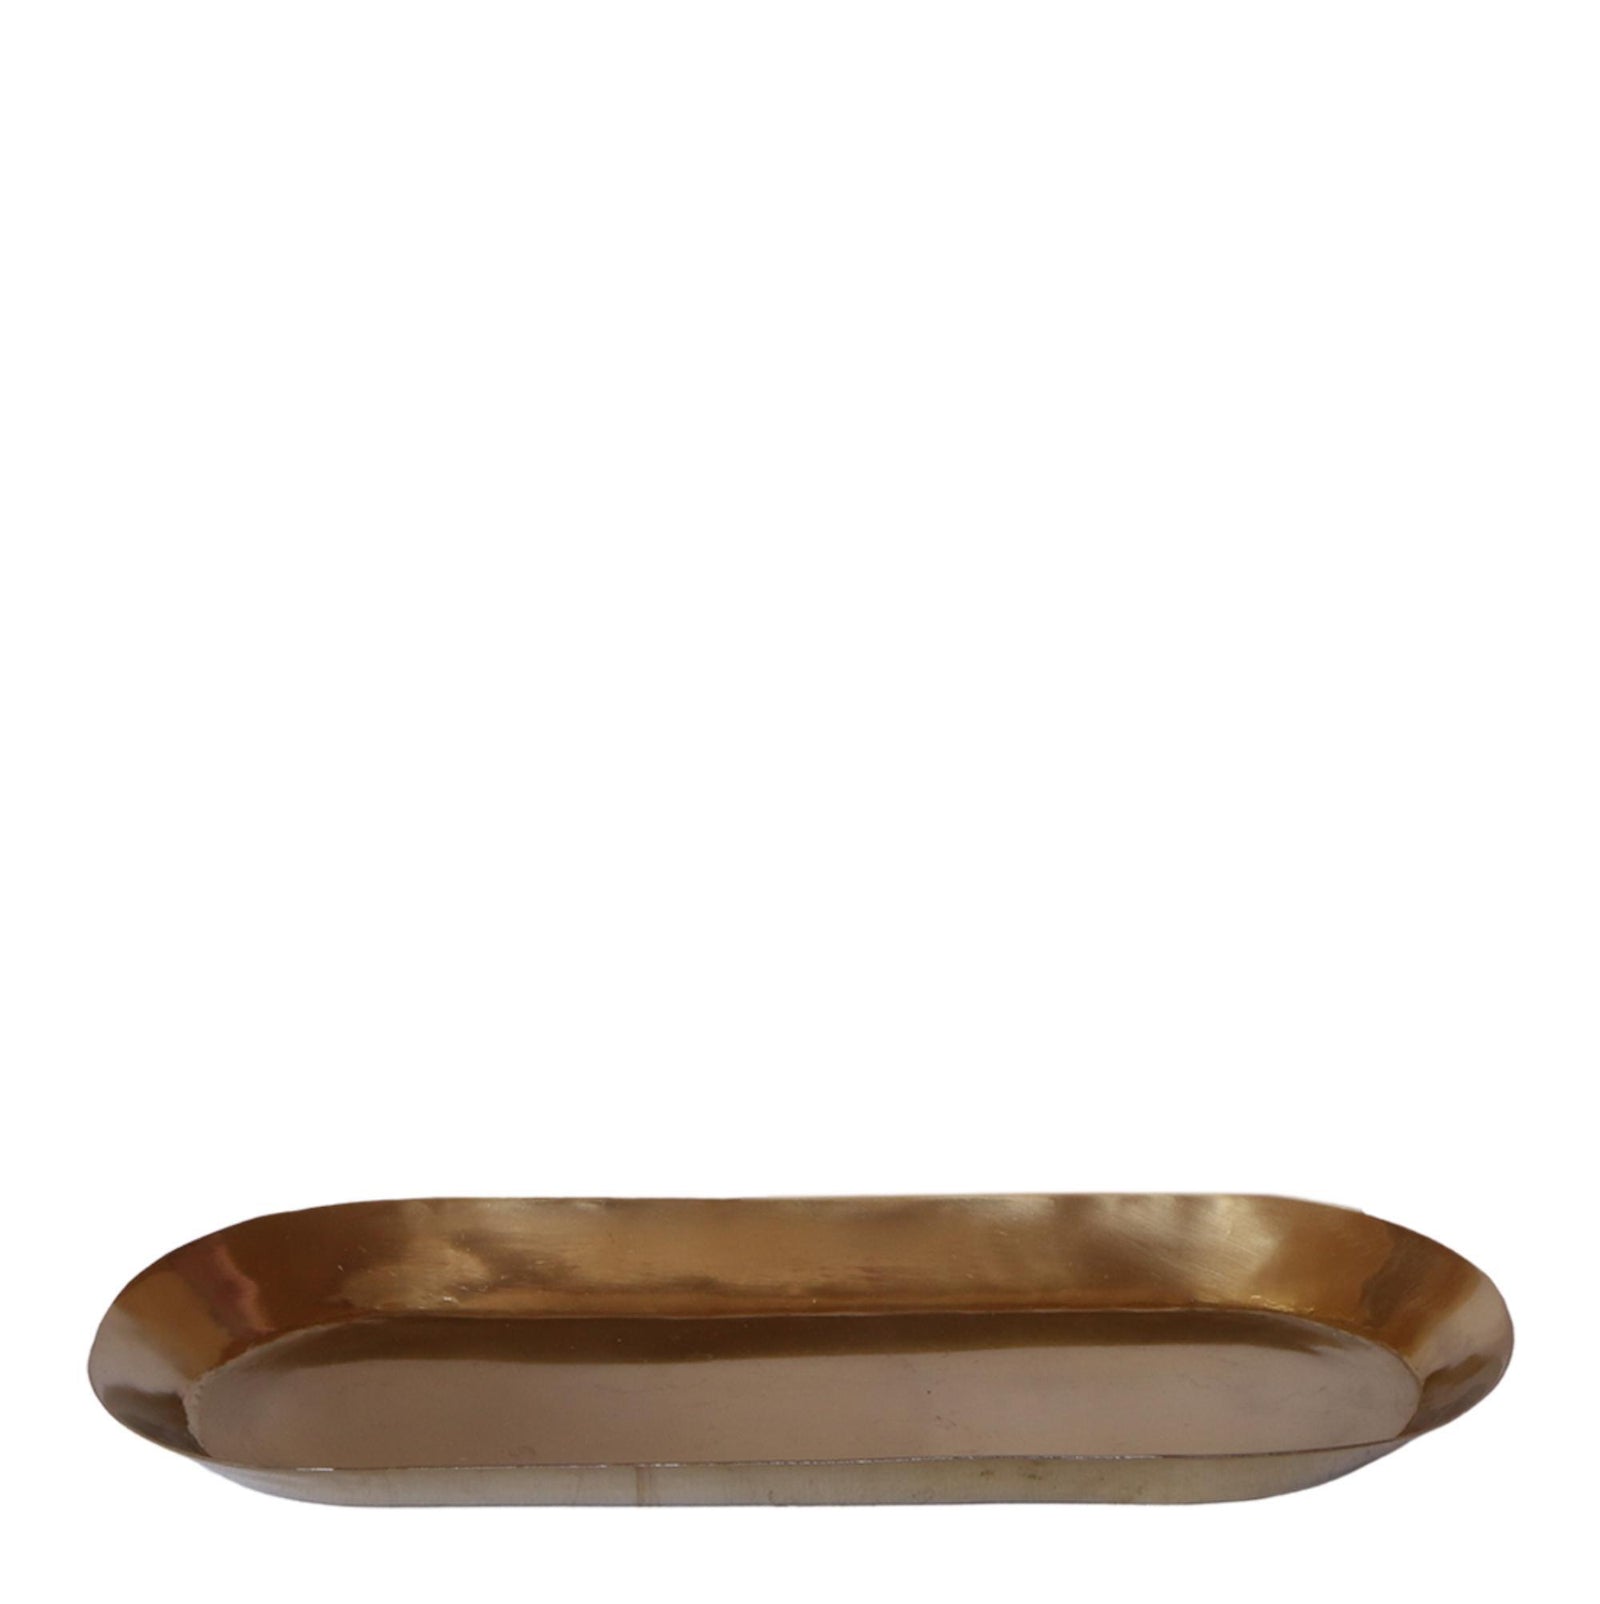 Kolibri Home | Plate oval -  Gouden ovale dienblad Ø30cm